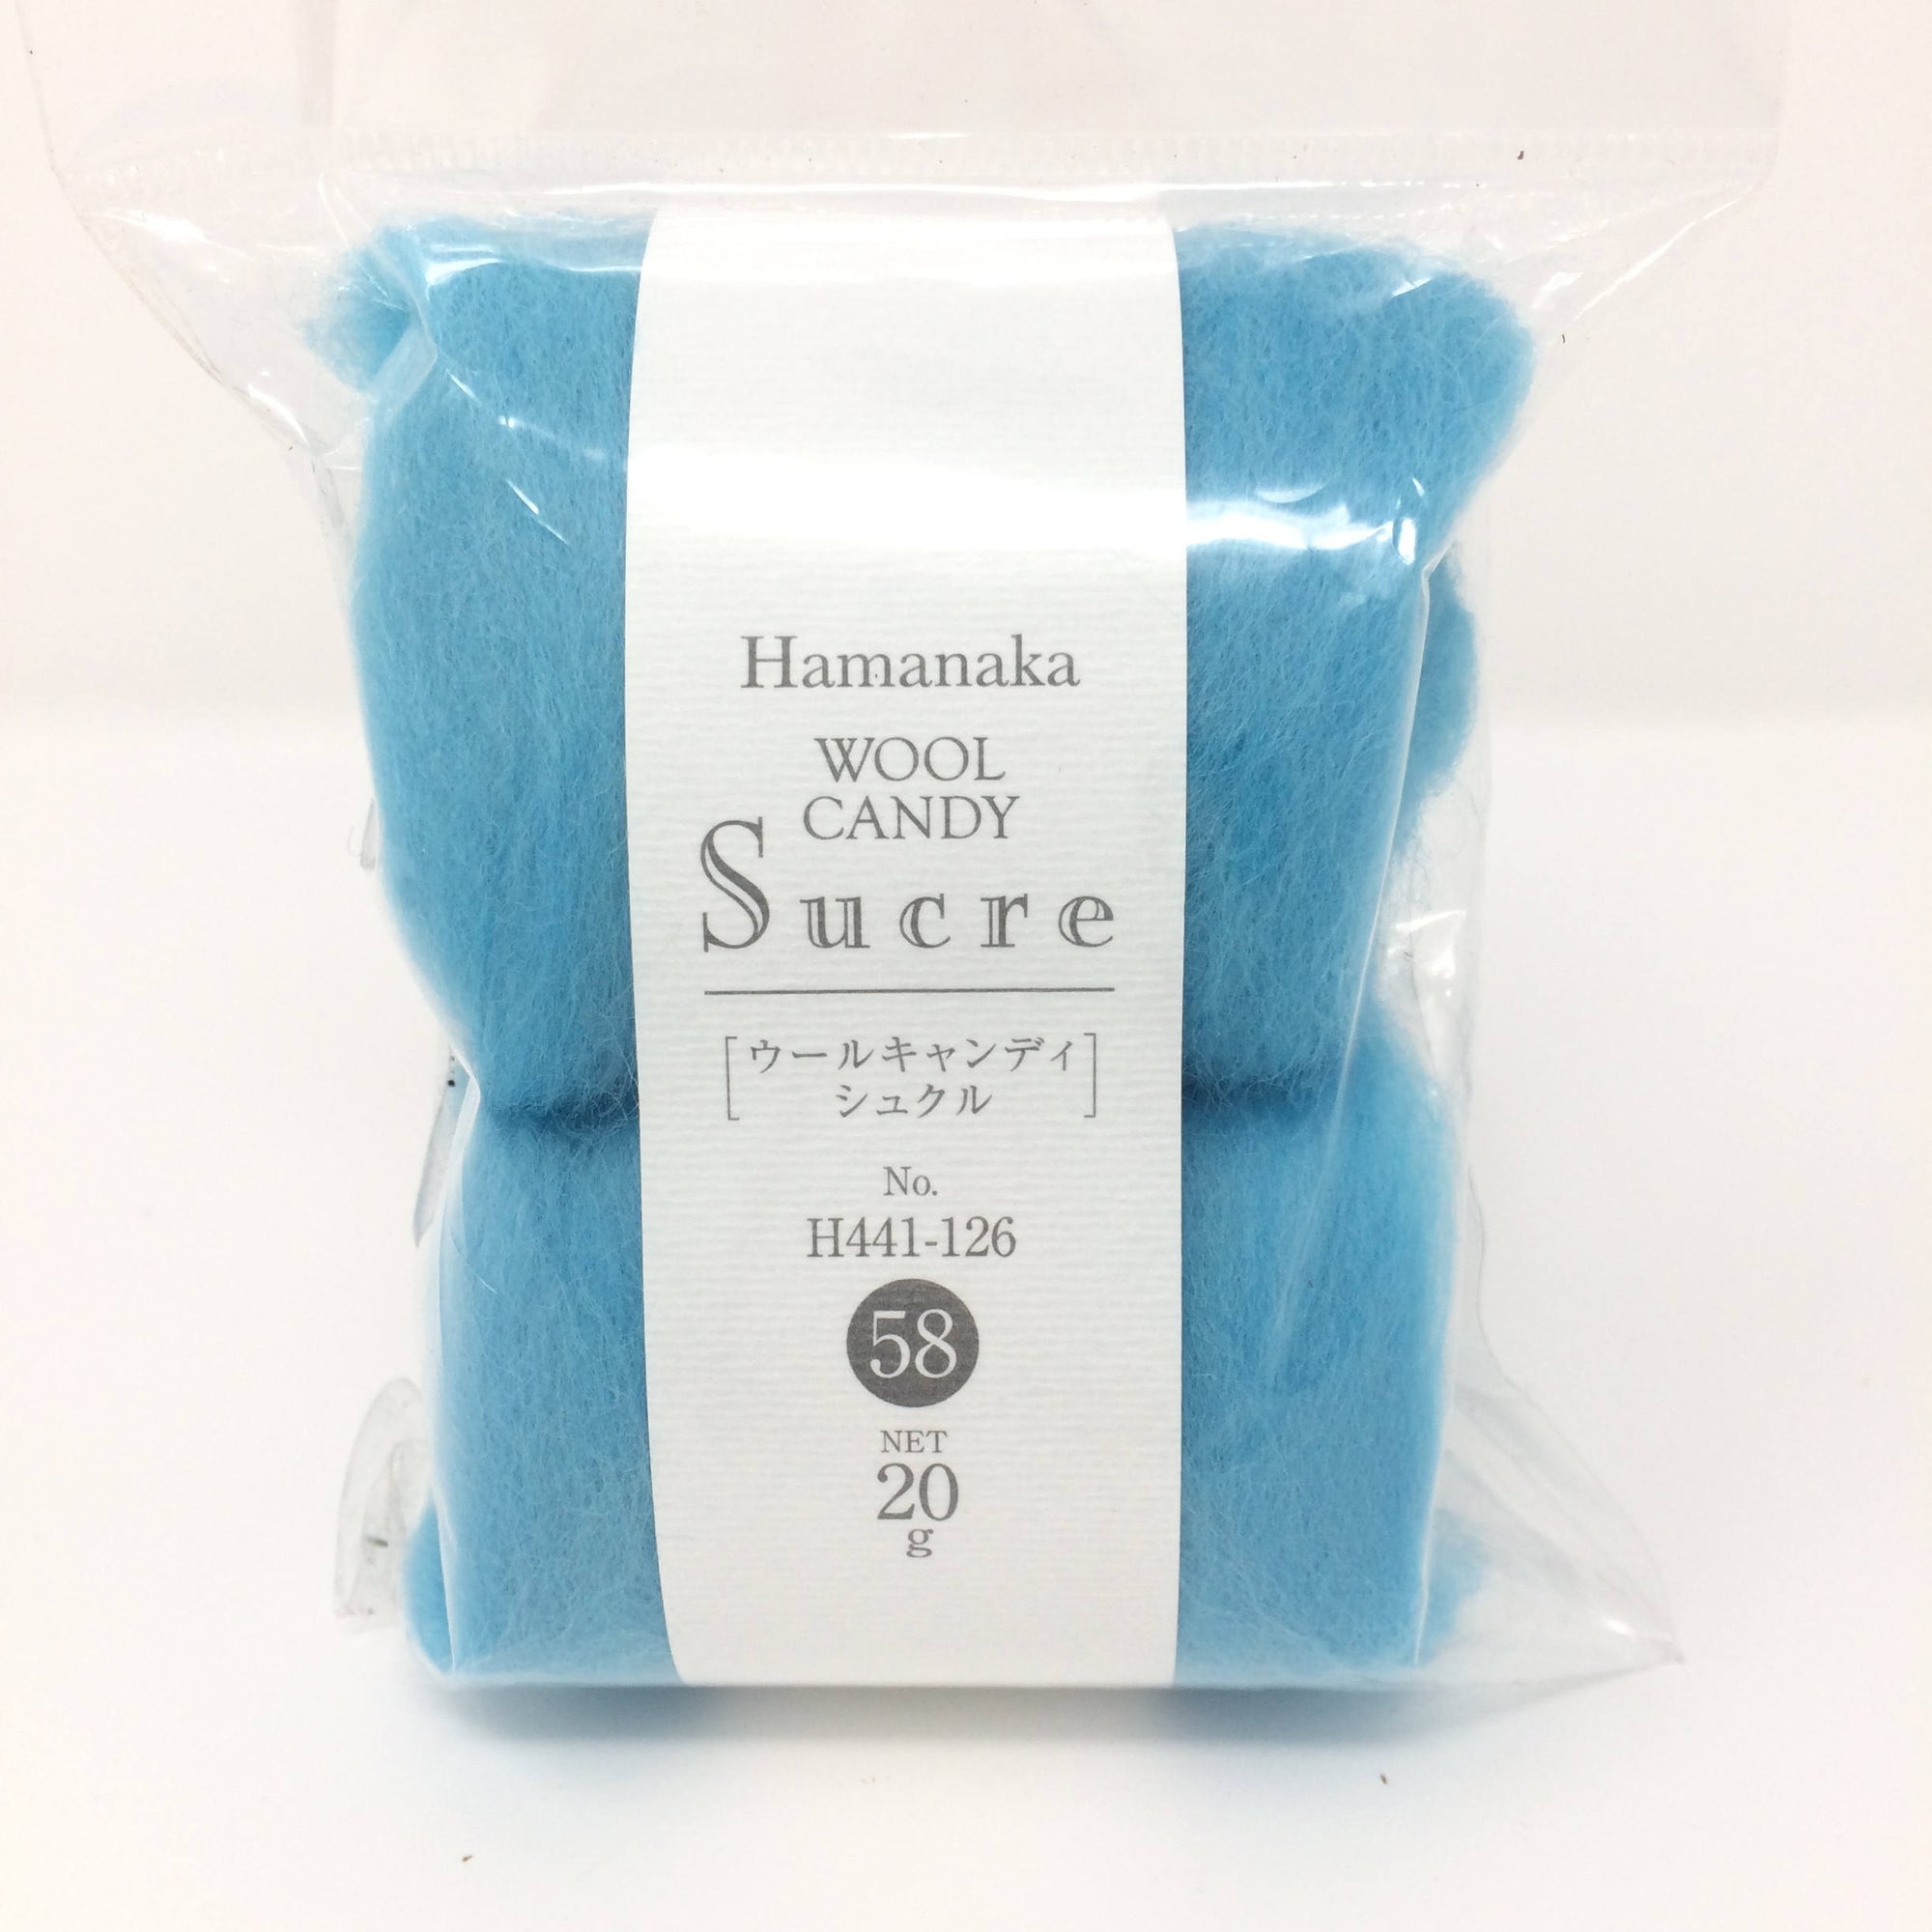 Hamanaka Wool Candy Sucre - Light Blue 20g